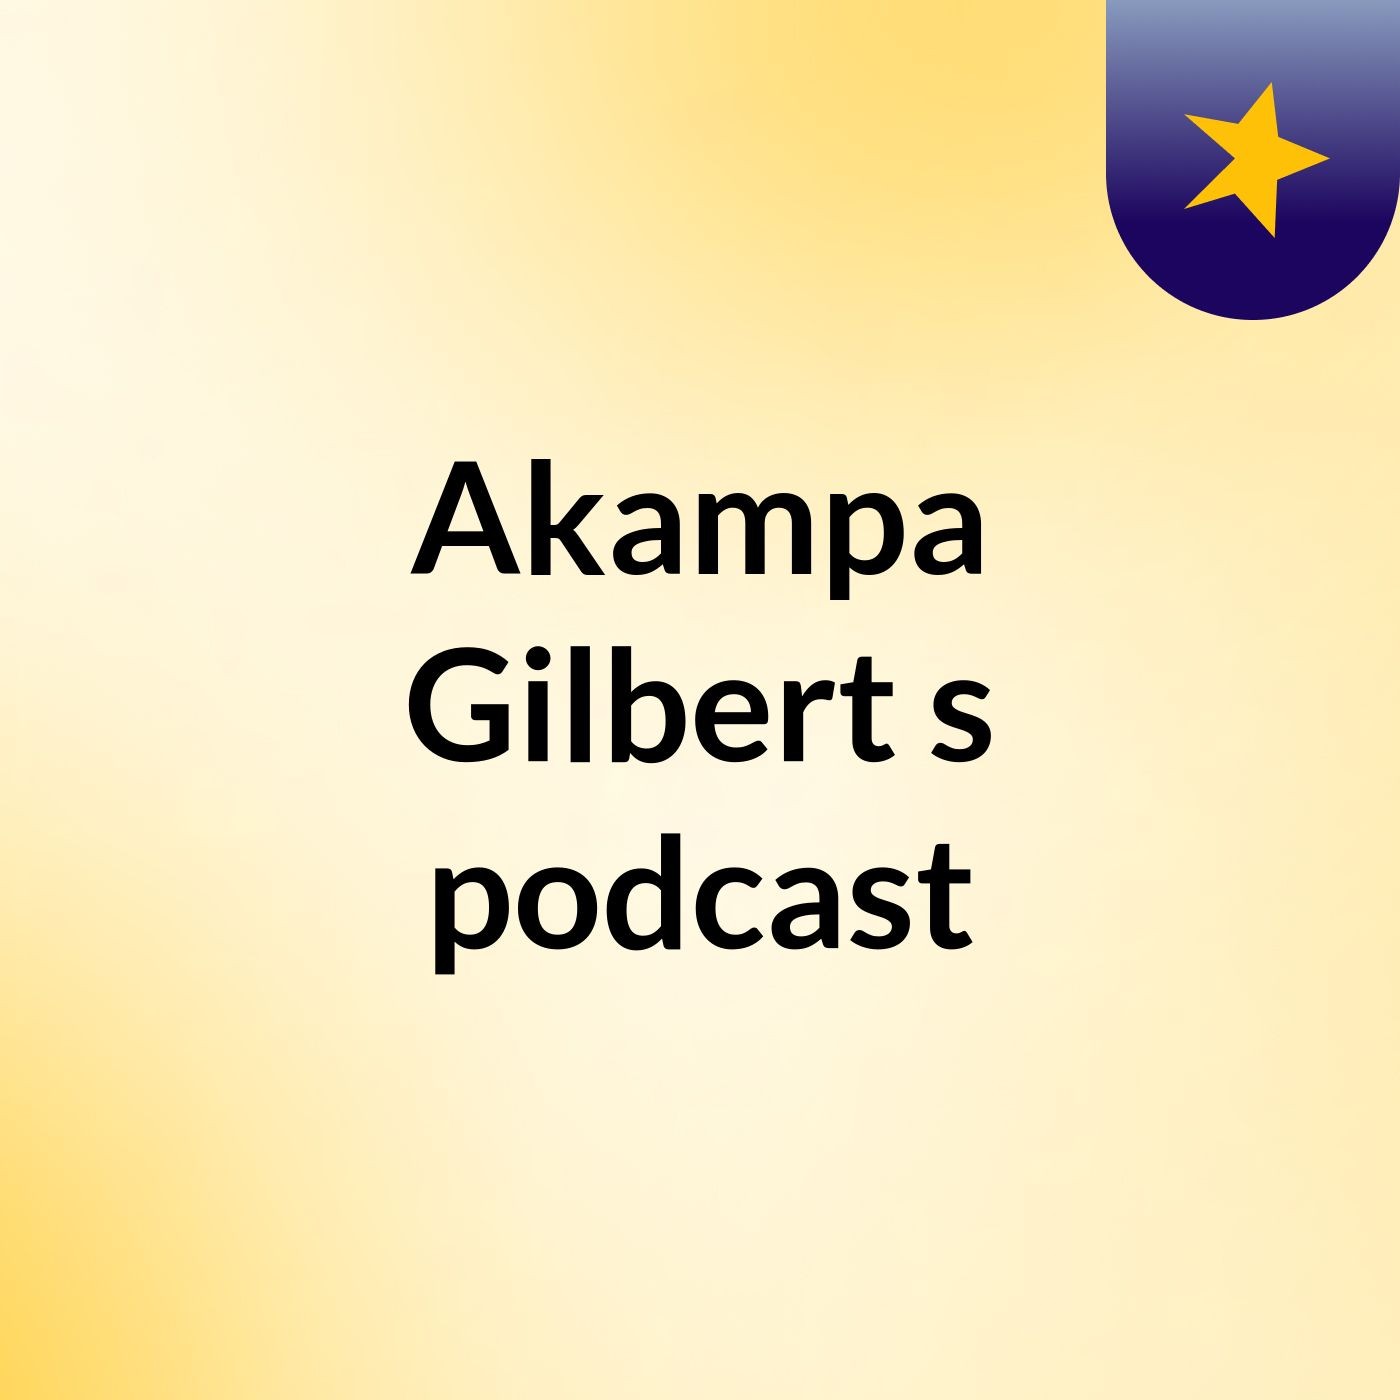 Akampa Gilbert's podcast